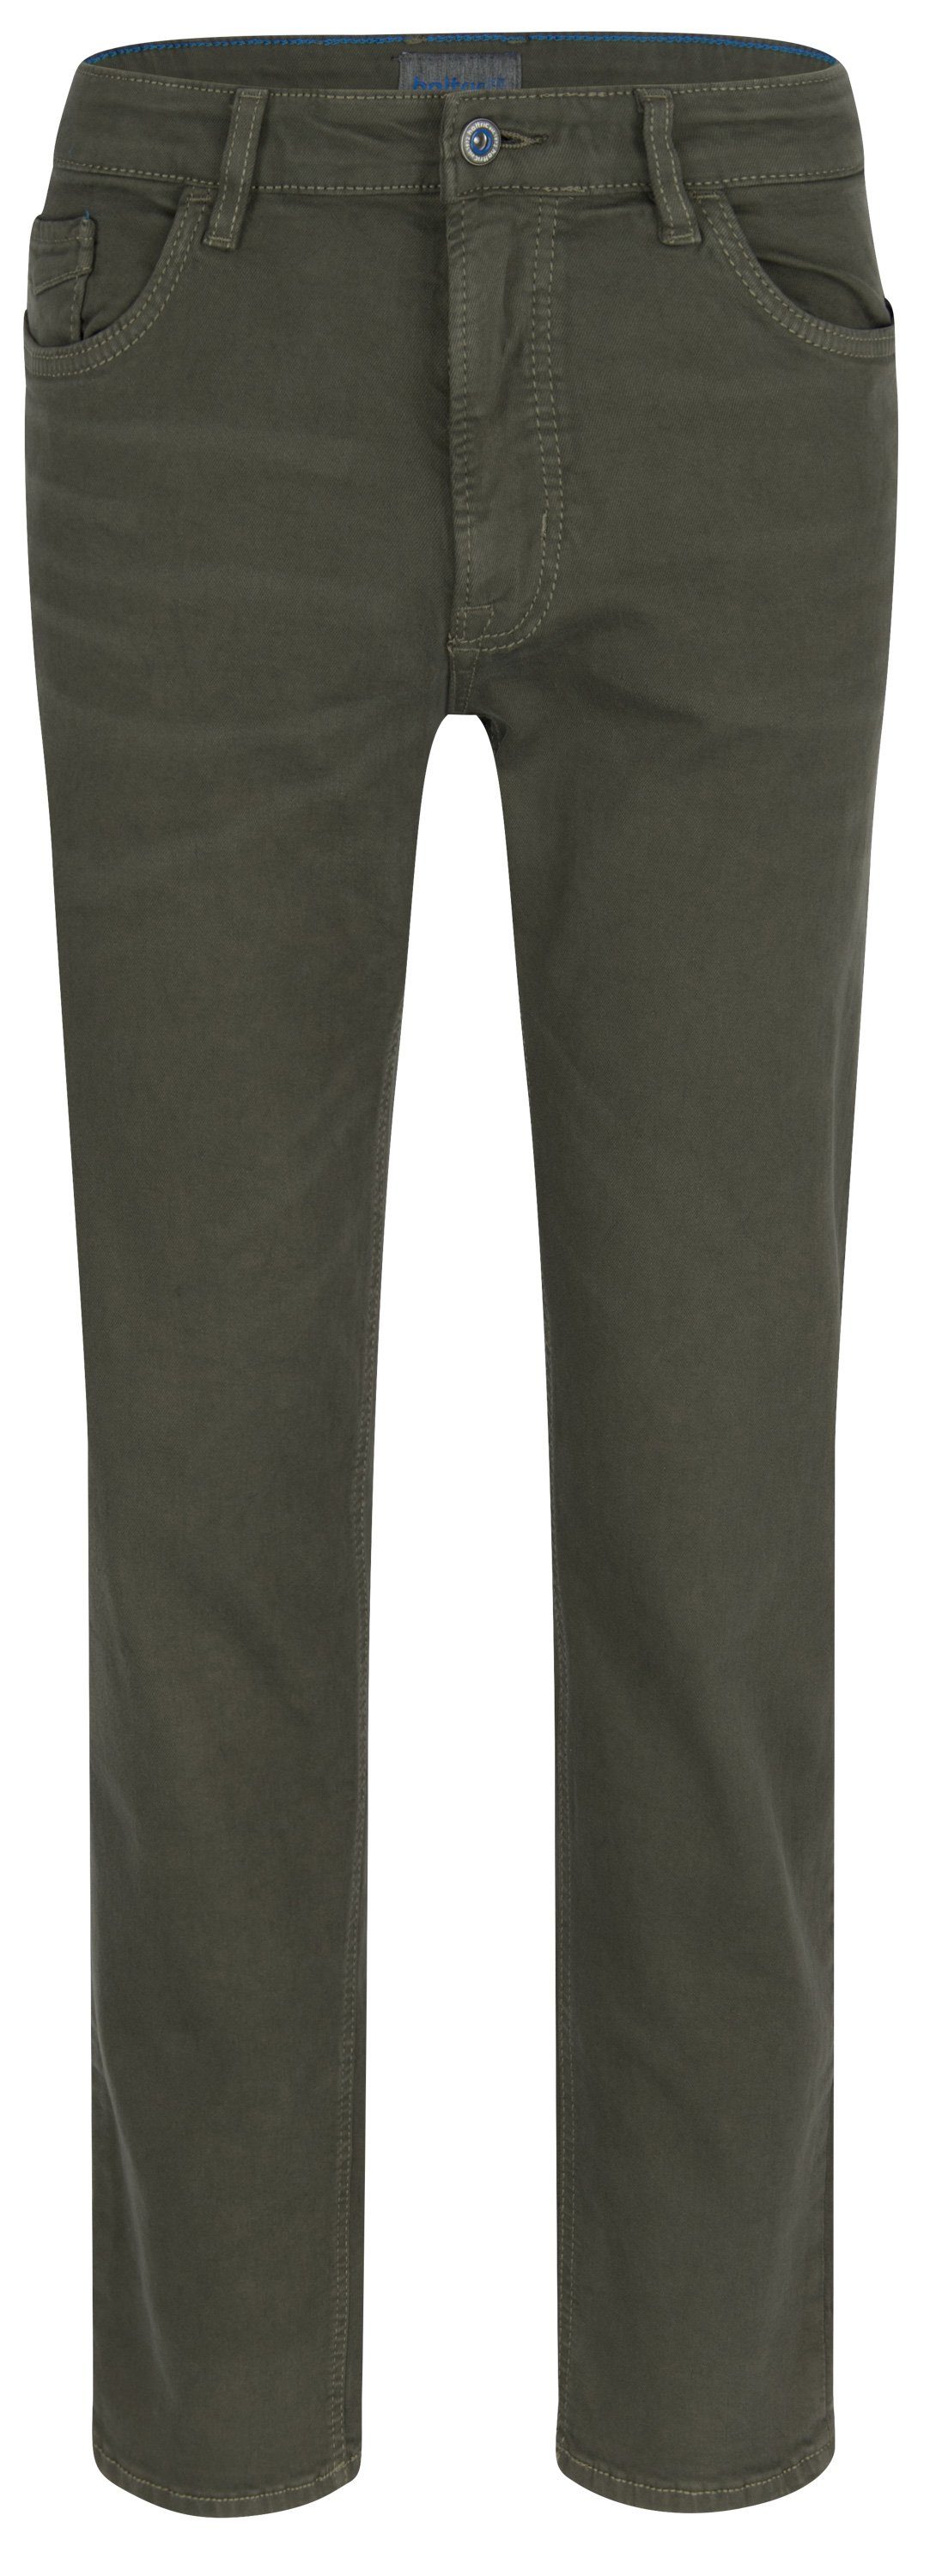 Hattric 5-Pocket-Jeans HATTRIC HUNTER khaki 688465 6350.31 - HIGH STRETCH